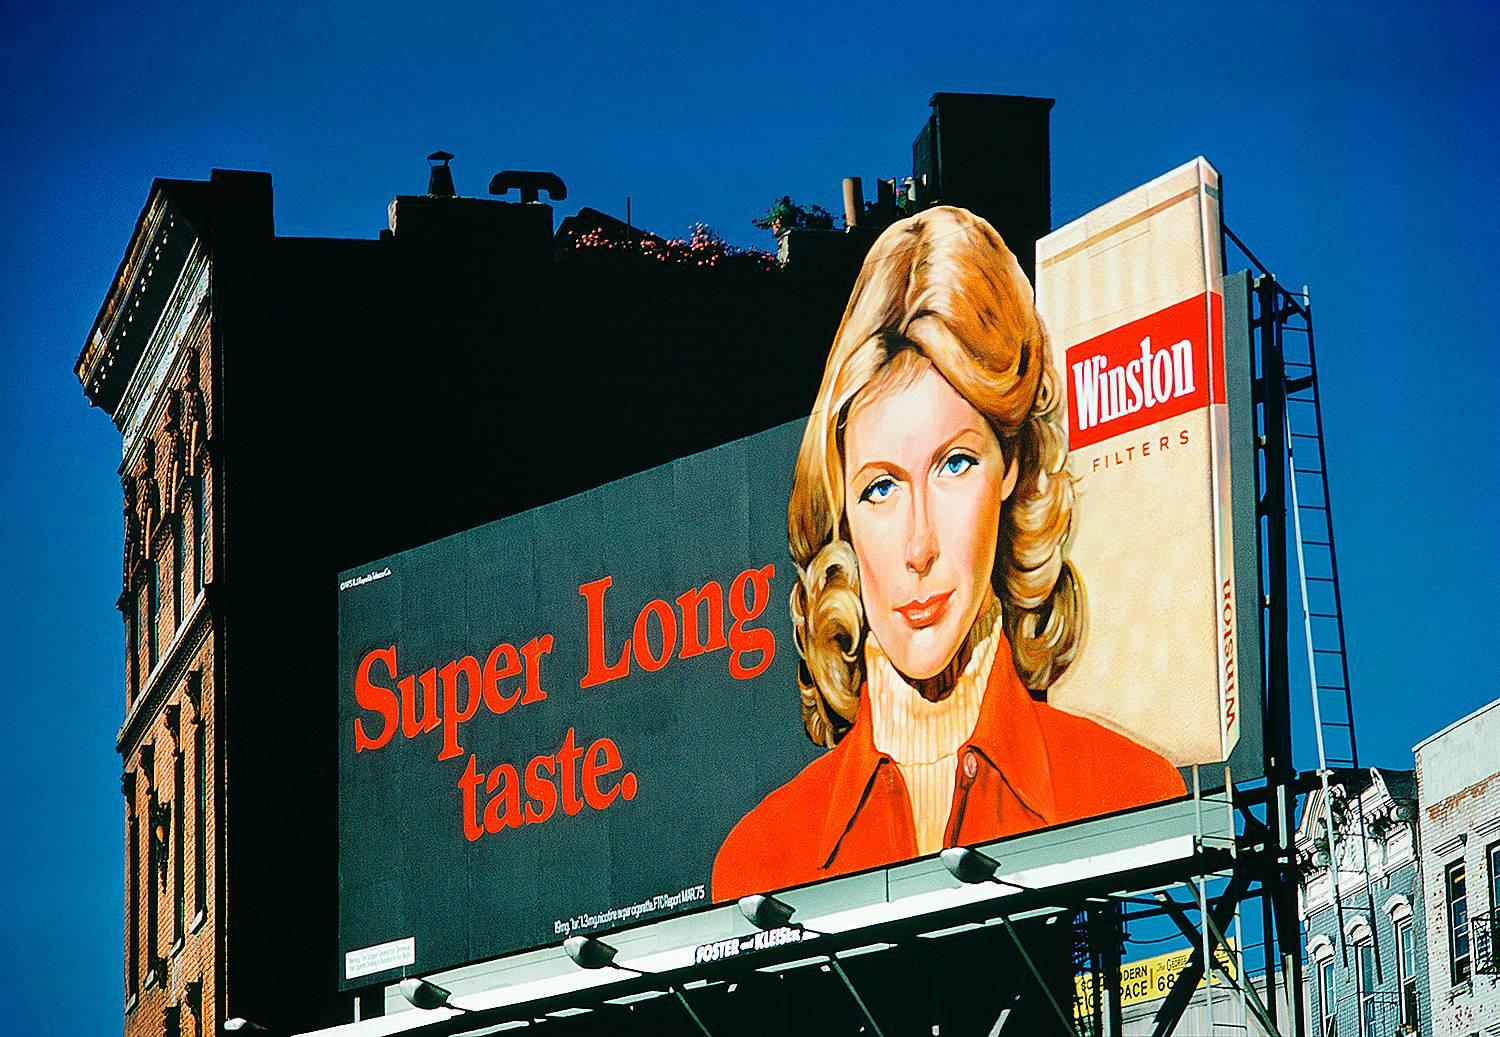 Color Photograph Mitchell Funk - Winston. Super Long Taste, Manhattan